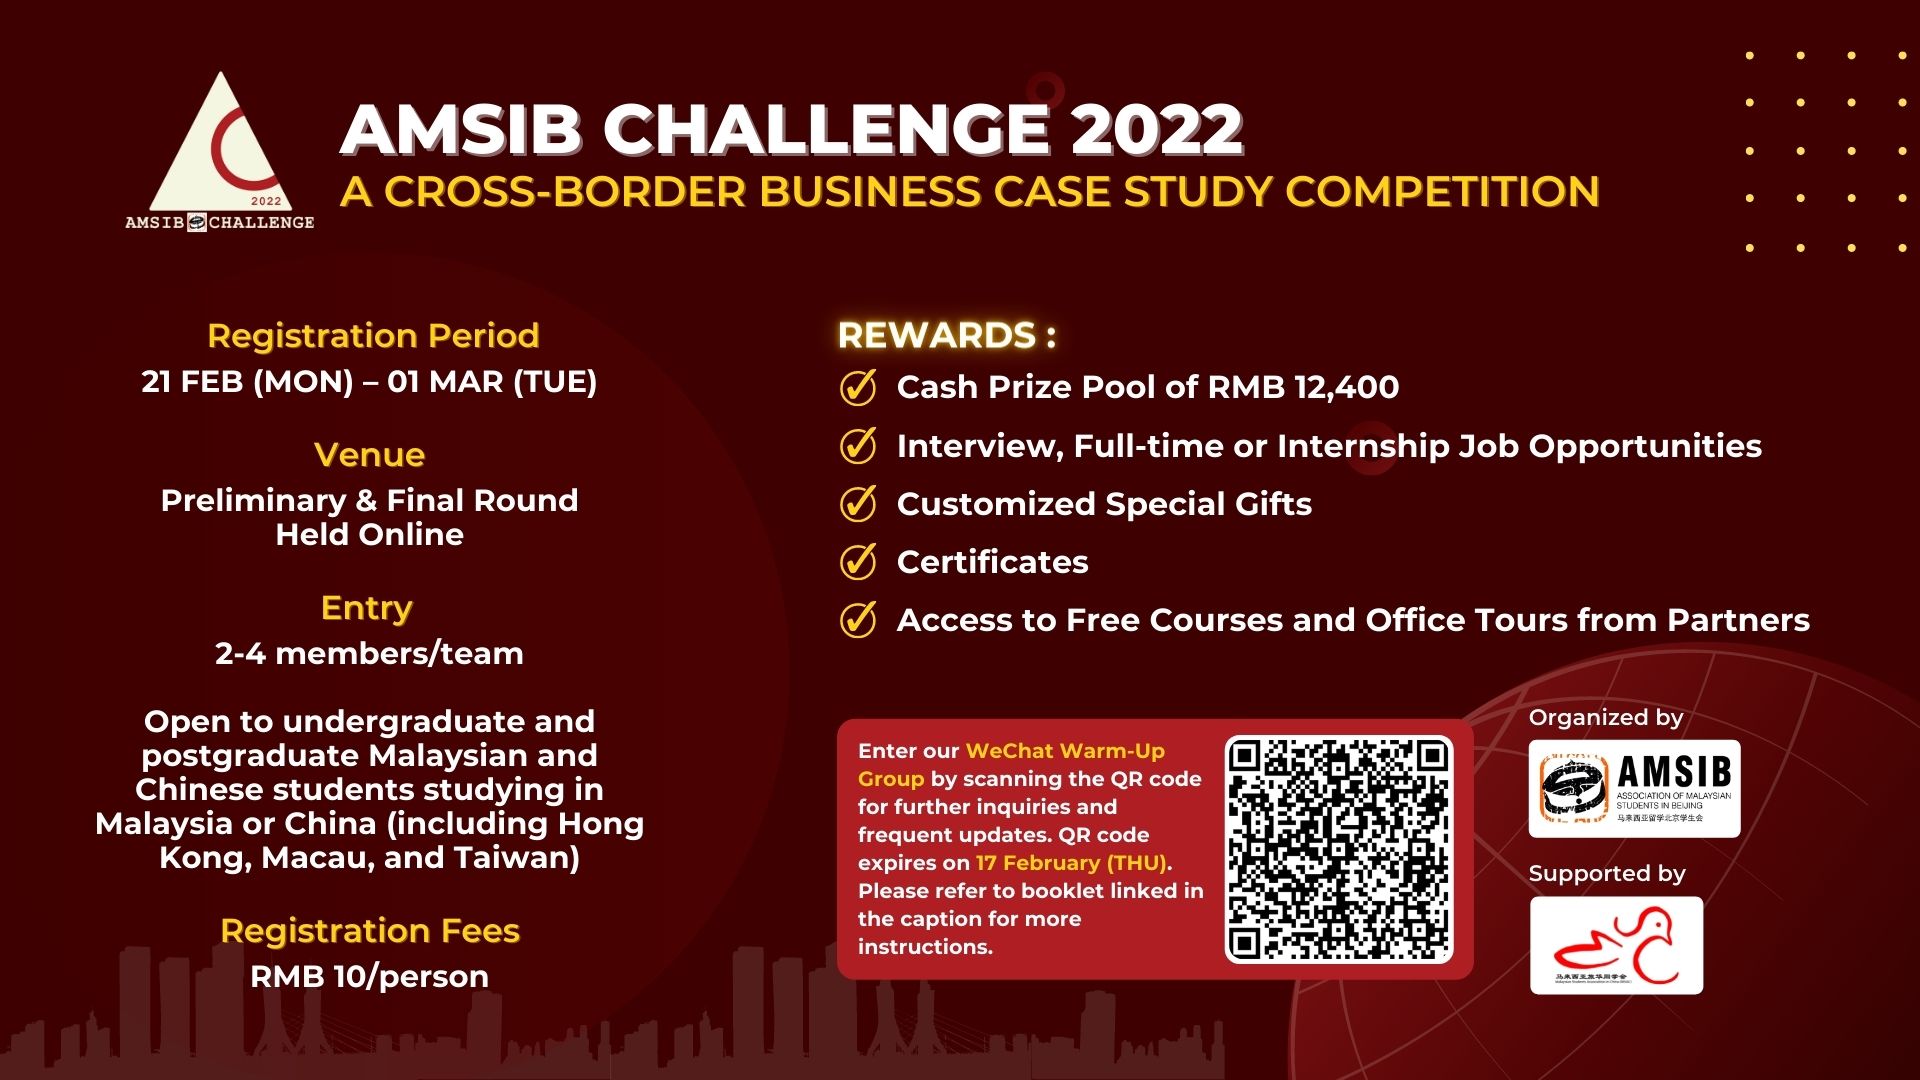 Amsib challenge 2022 offering internship opportunities